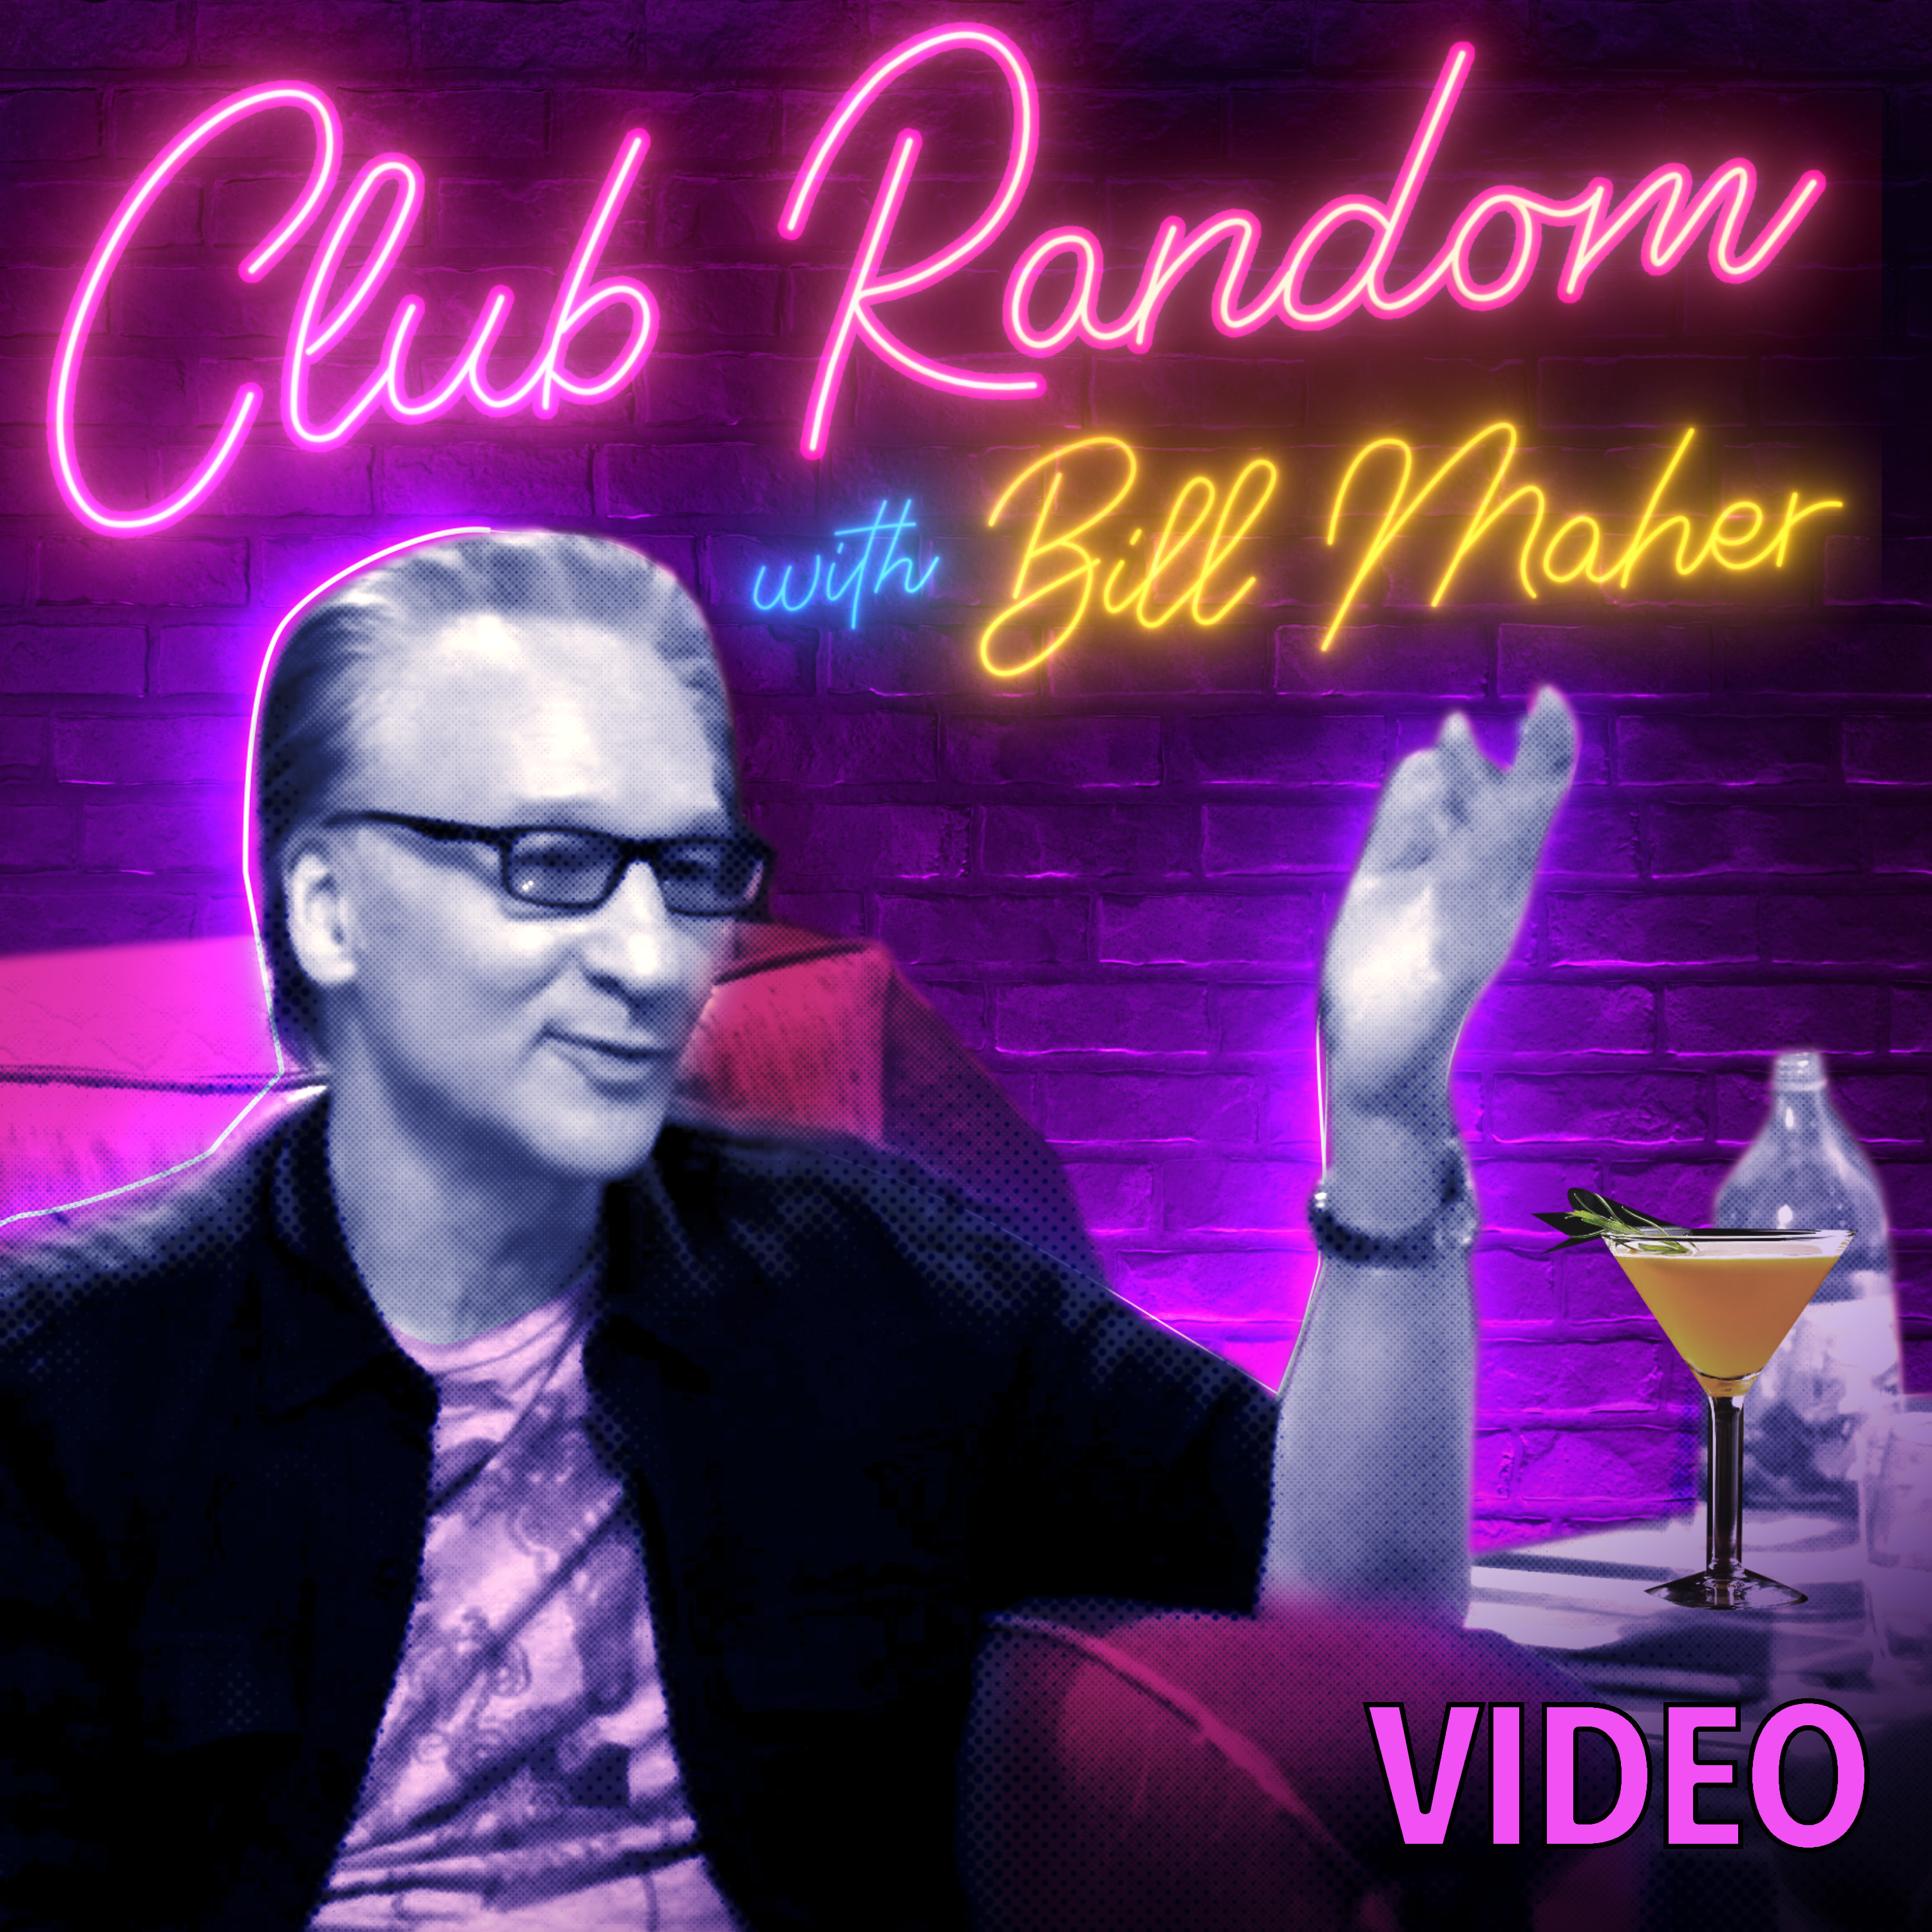 Video: Ron Perlman | Club Random with Bill Maher